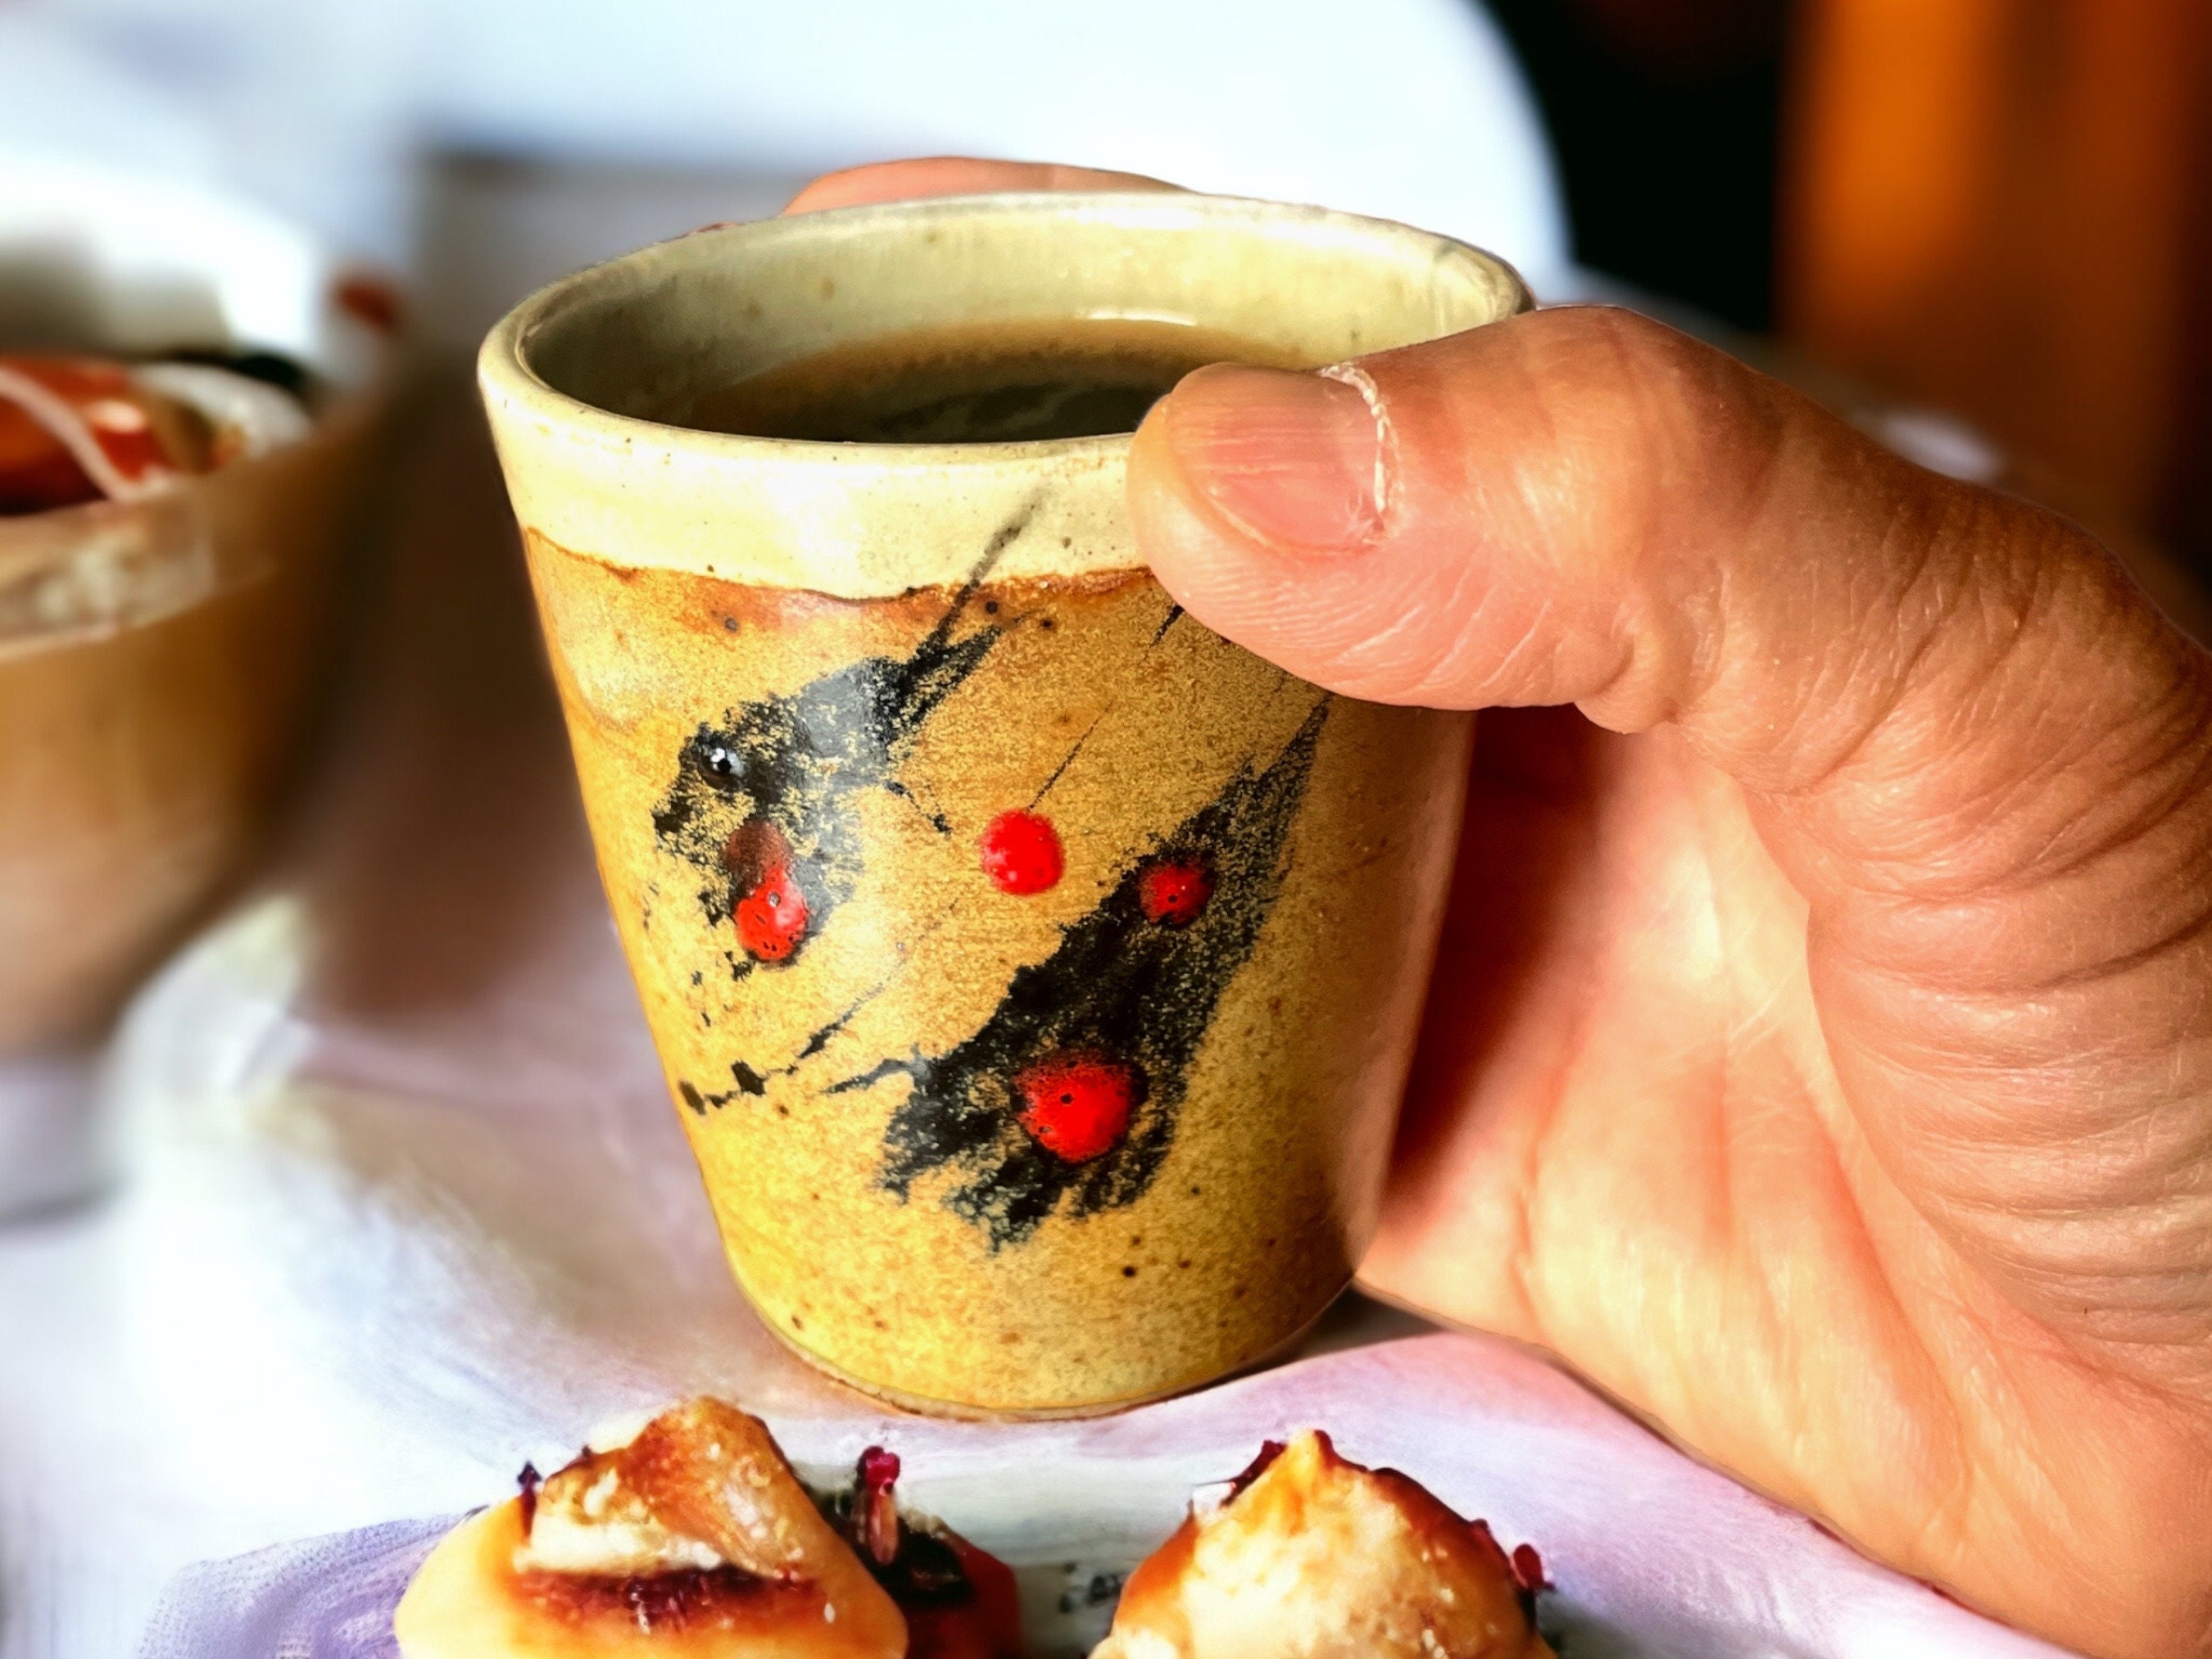 Cortado Coffee Cups – Besiki Ceramics